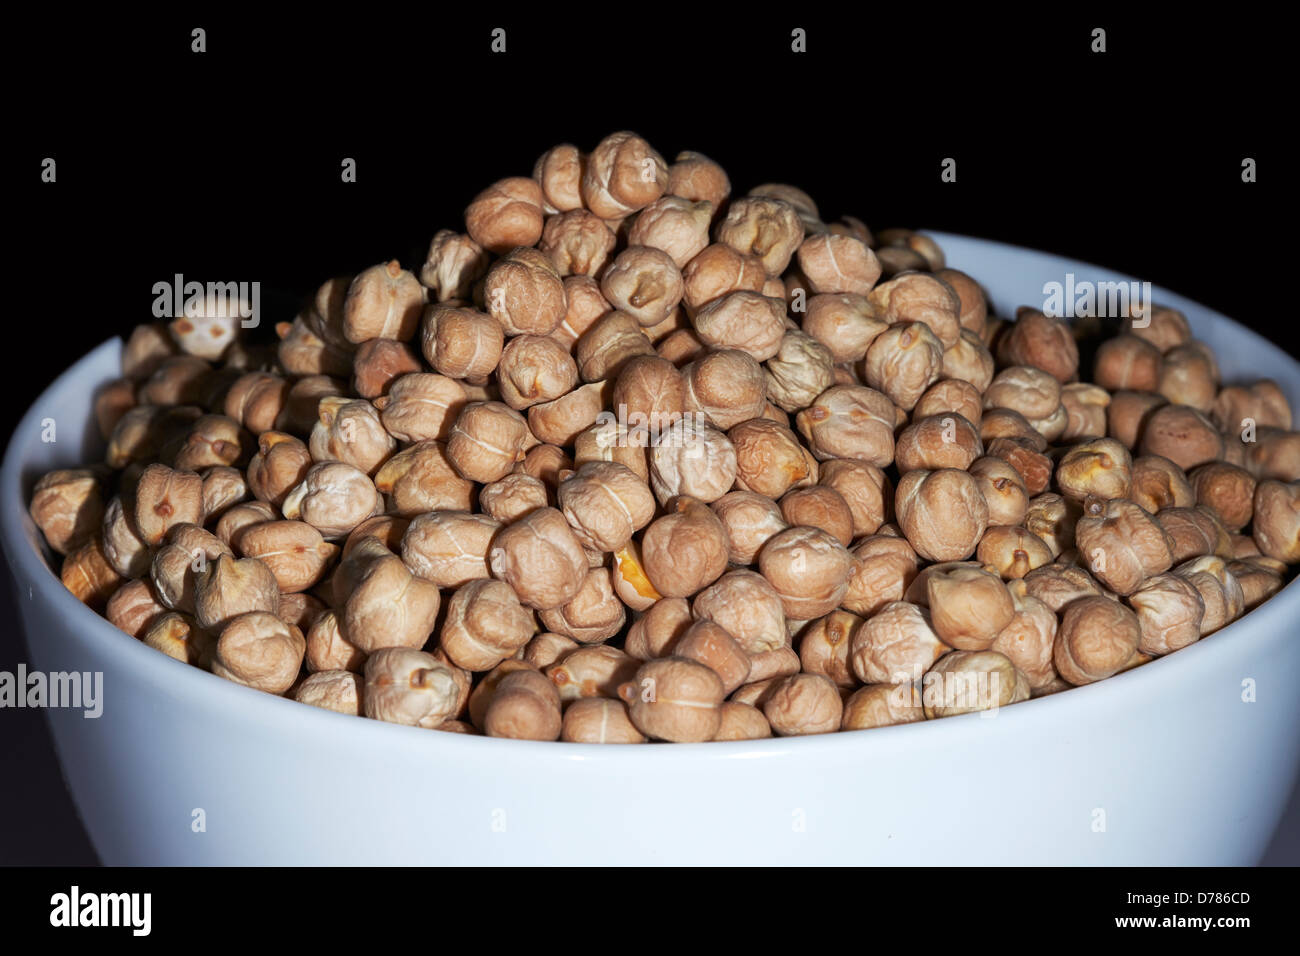 Bowl of Chickpeas (Cicer arietinum) or Garbanzo beans Stock Photo